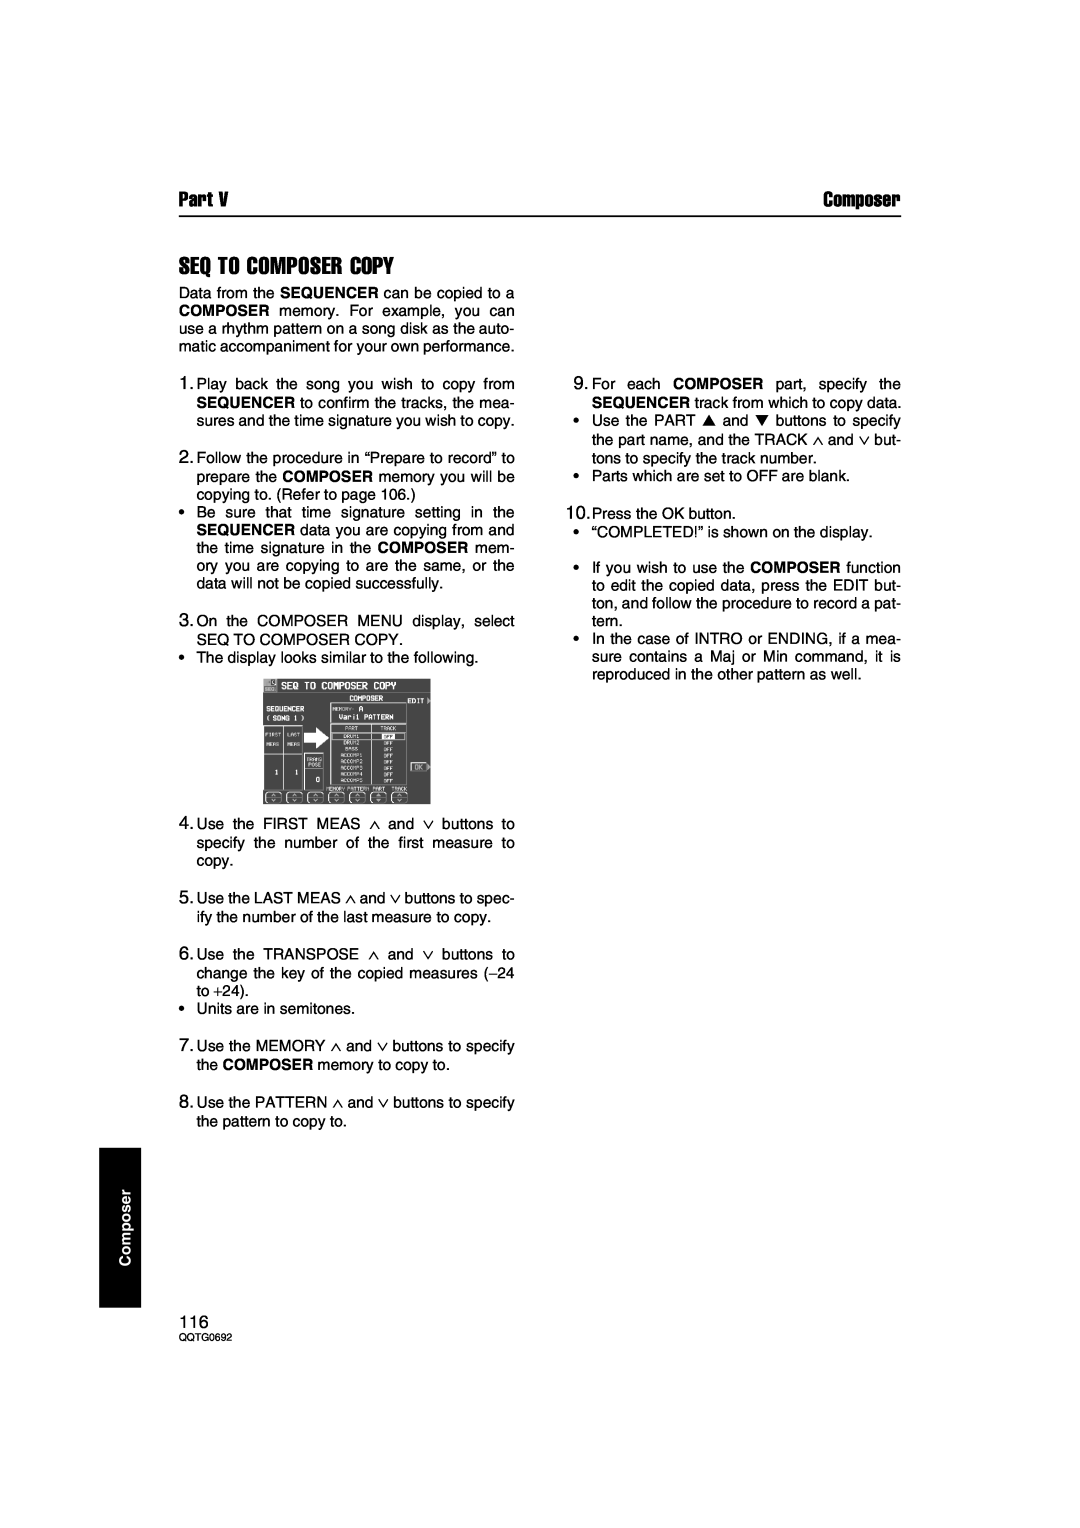 Panasonic SX-KN2600, SX-KN2400 manual Seq To Composer Copy, Part 